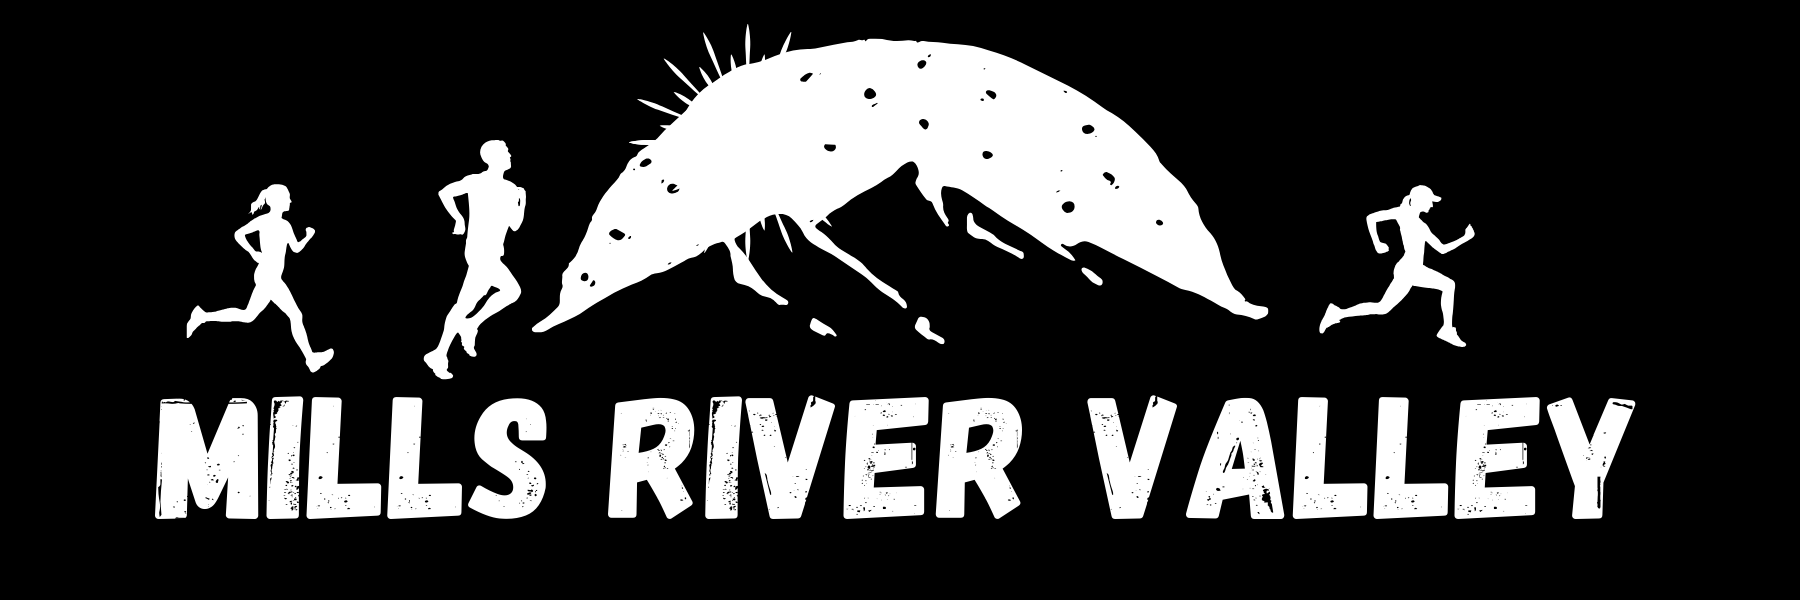 Mills River Valley Race